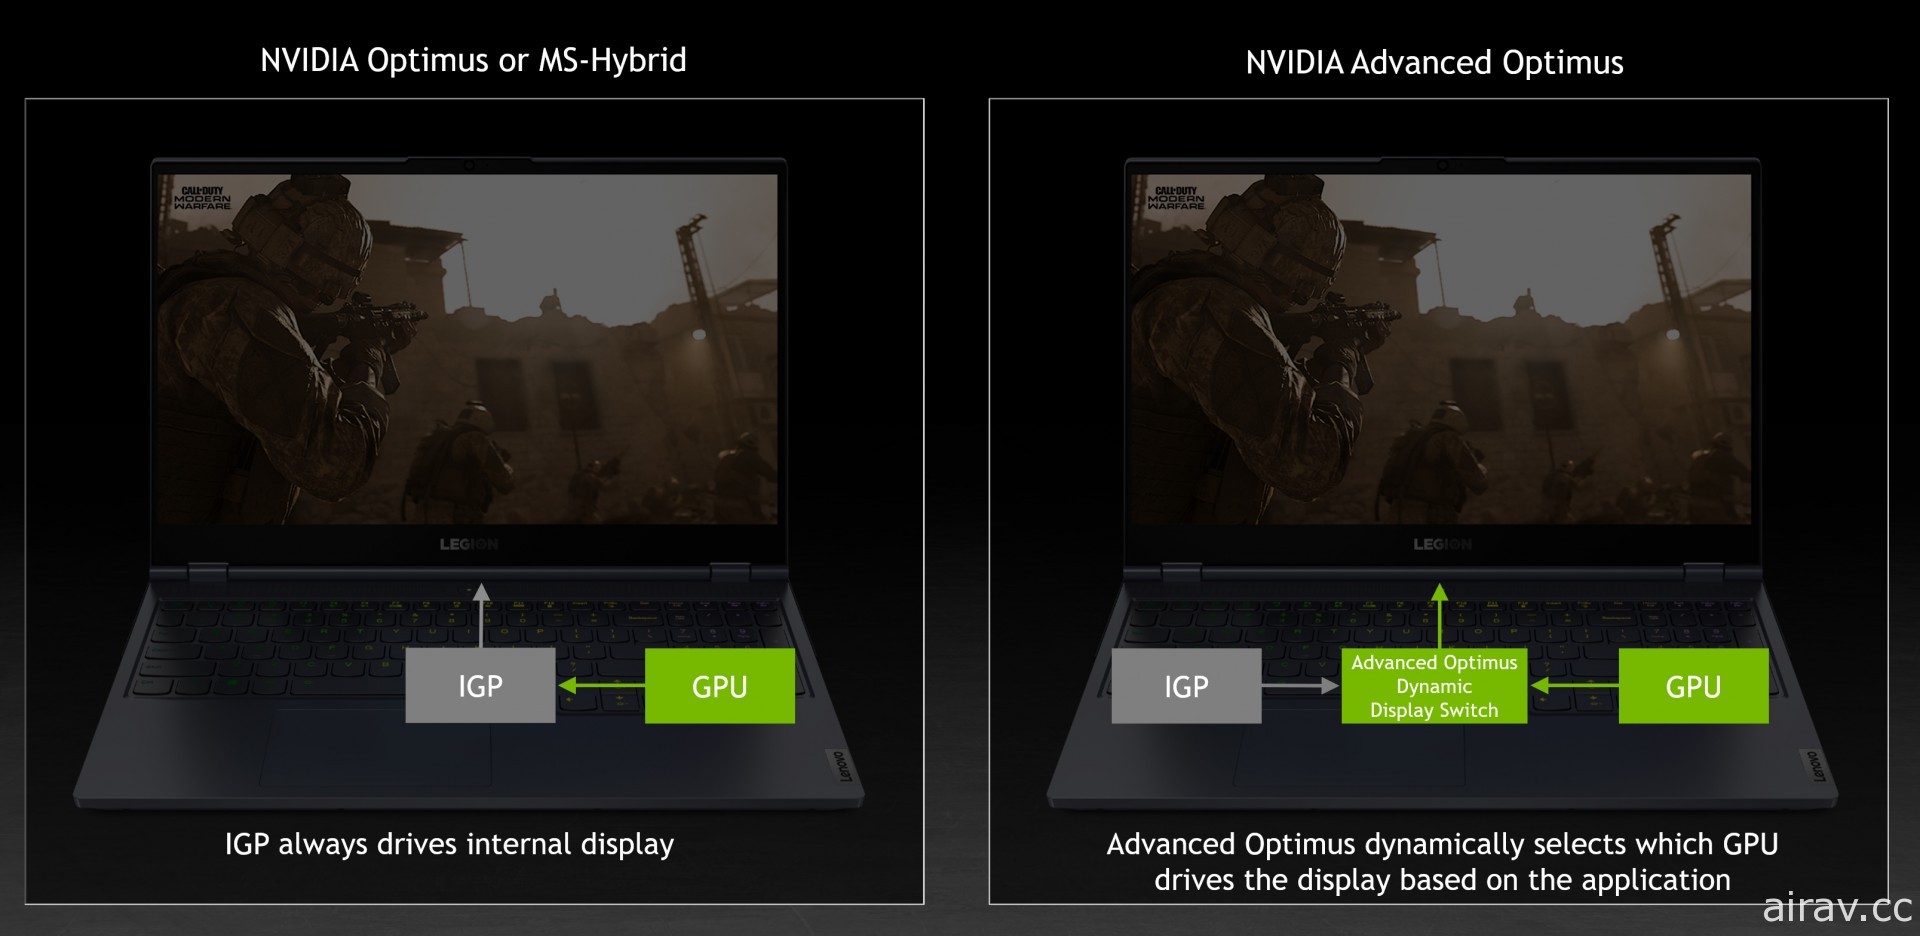 NVIDIA 介紹 Advanced Optimus 技術 強調能提高遊戲效能與最佳化電池壽命